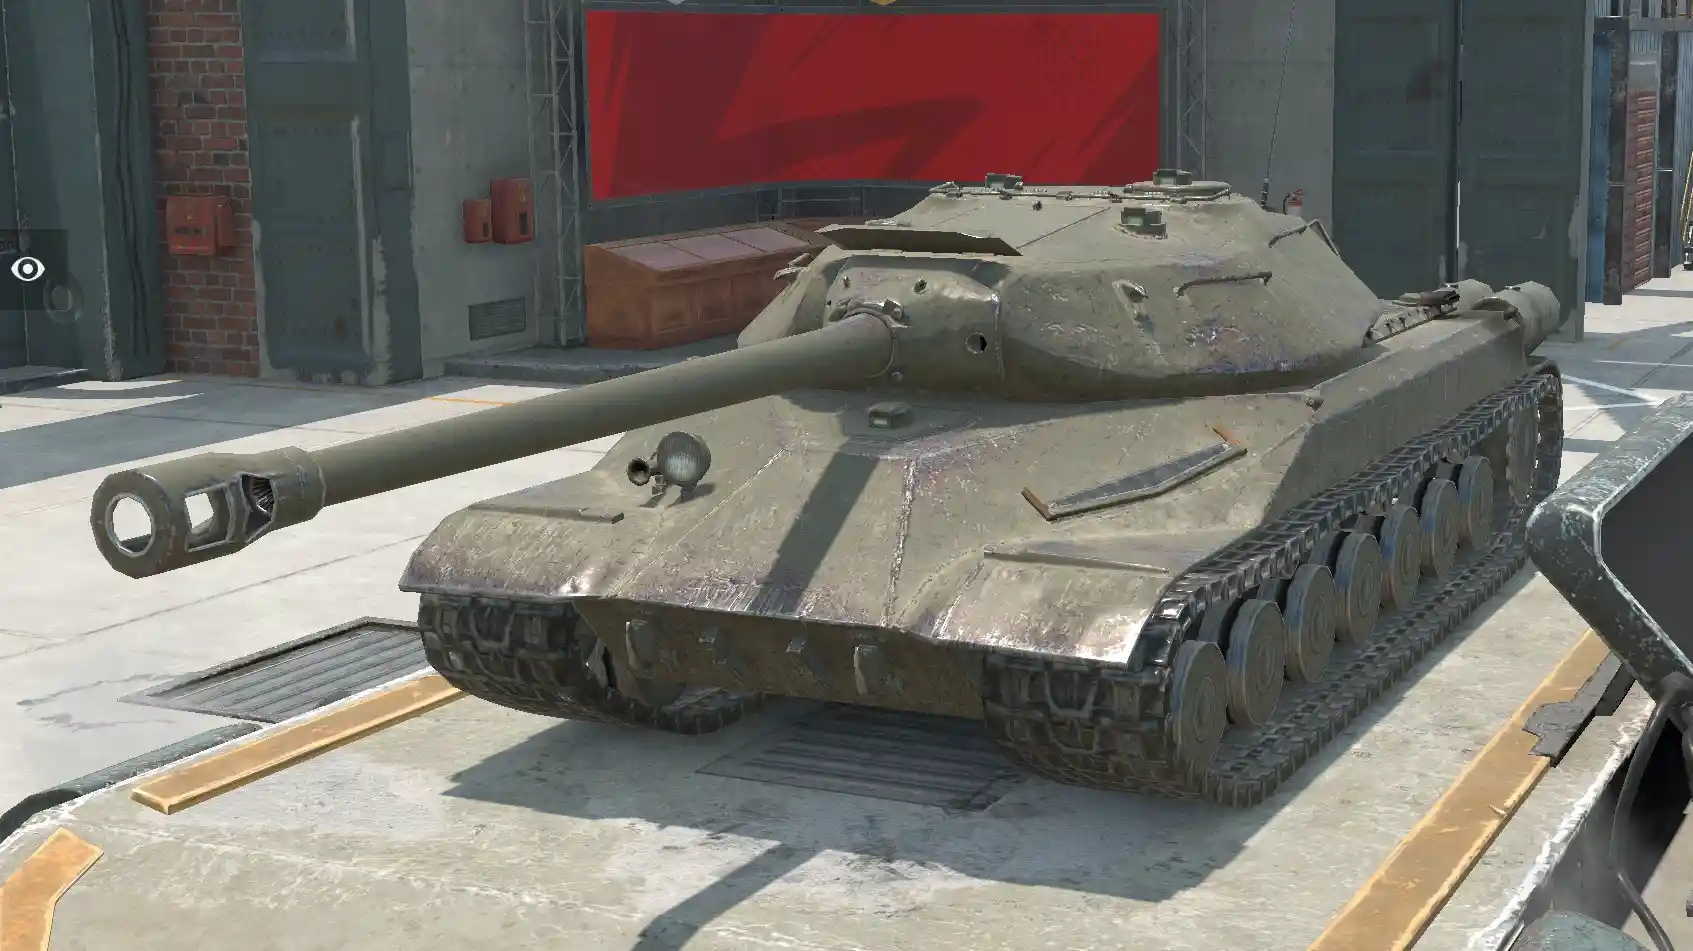 K-2 - World of Tanks Blitz Wiki*